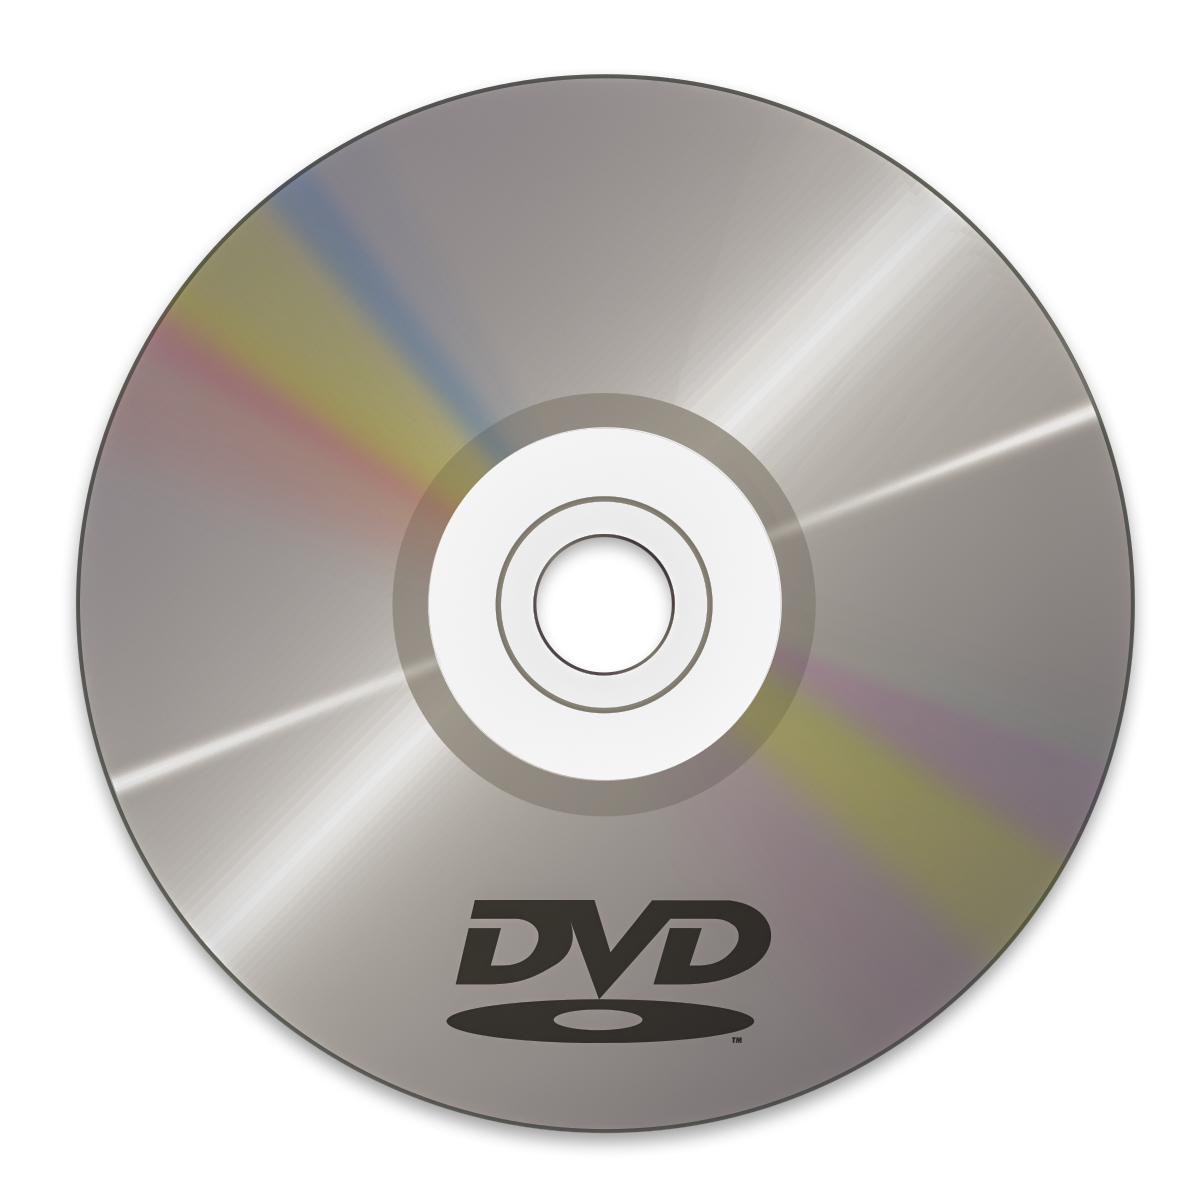 An Image of a DVD disc